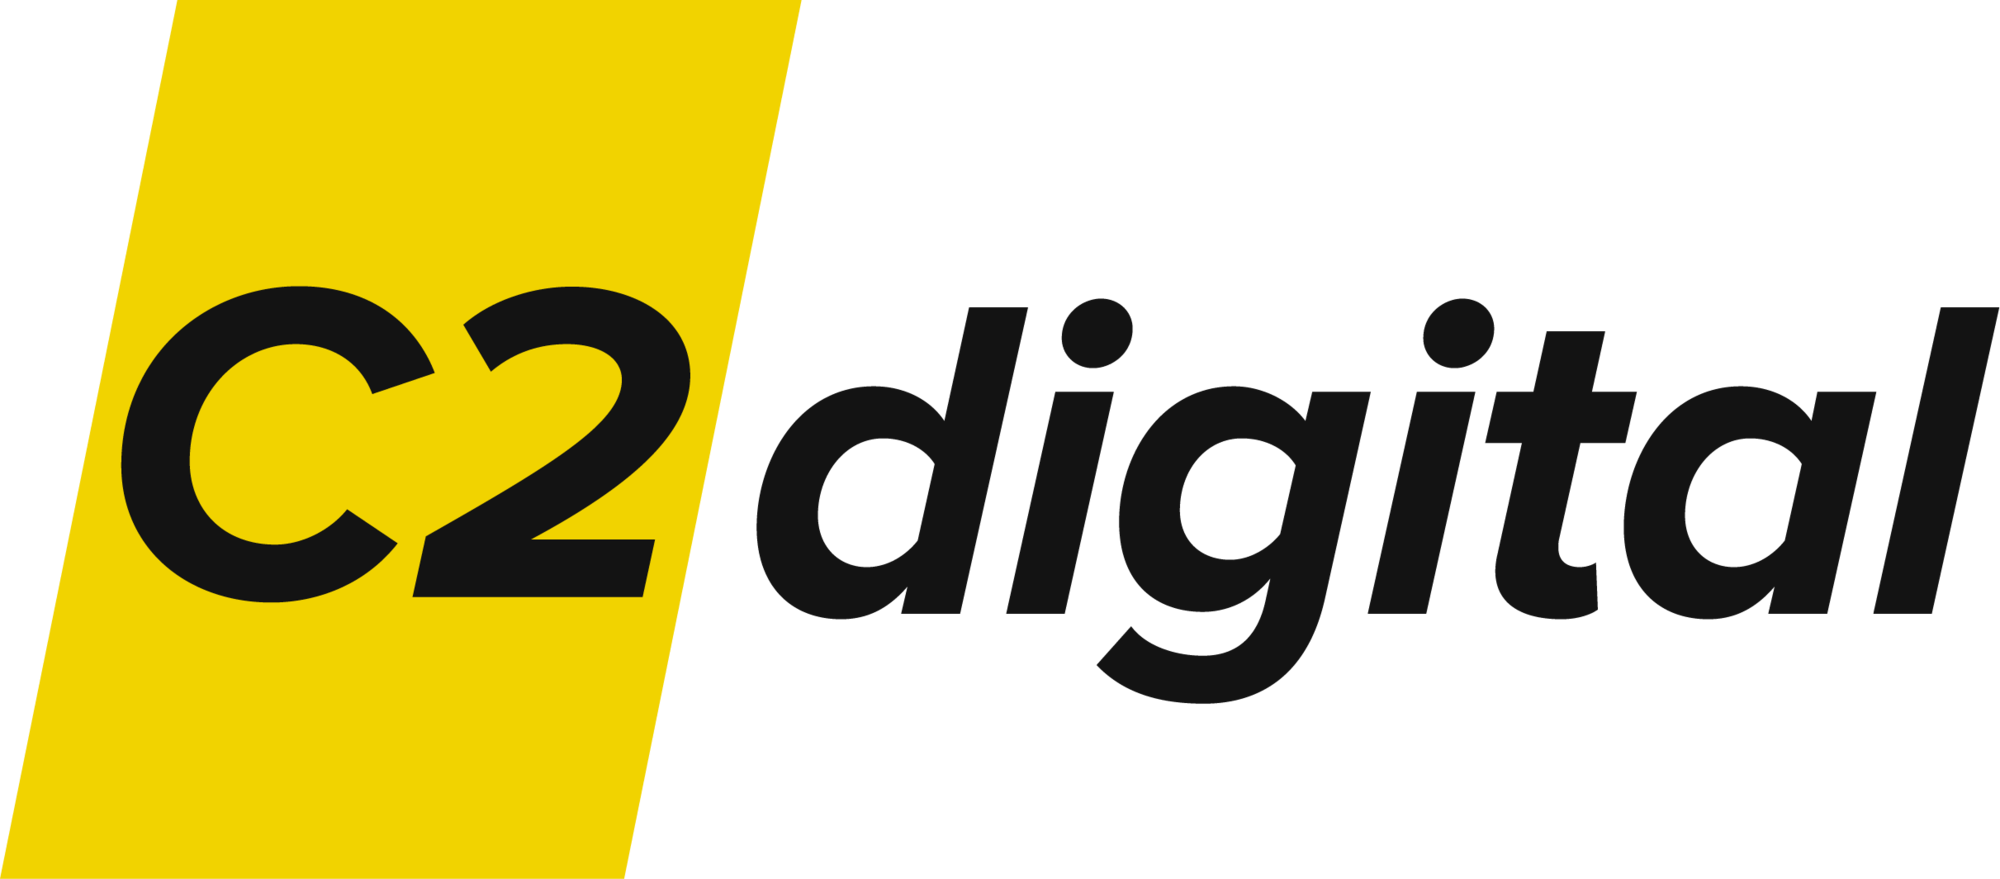 C2 Digital Logo Final (1)